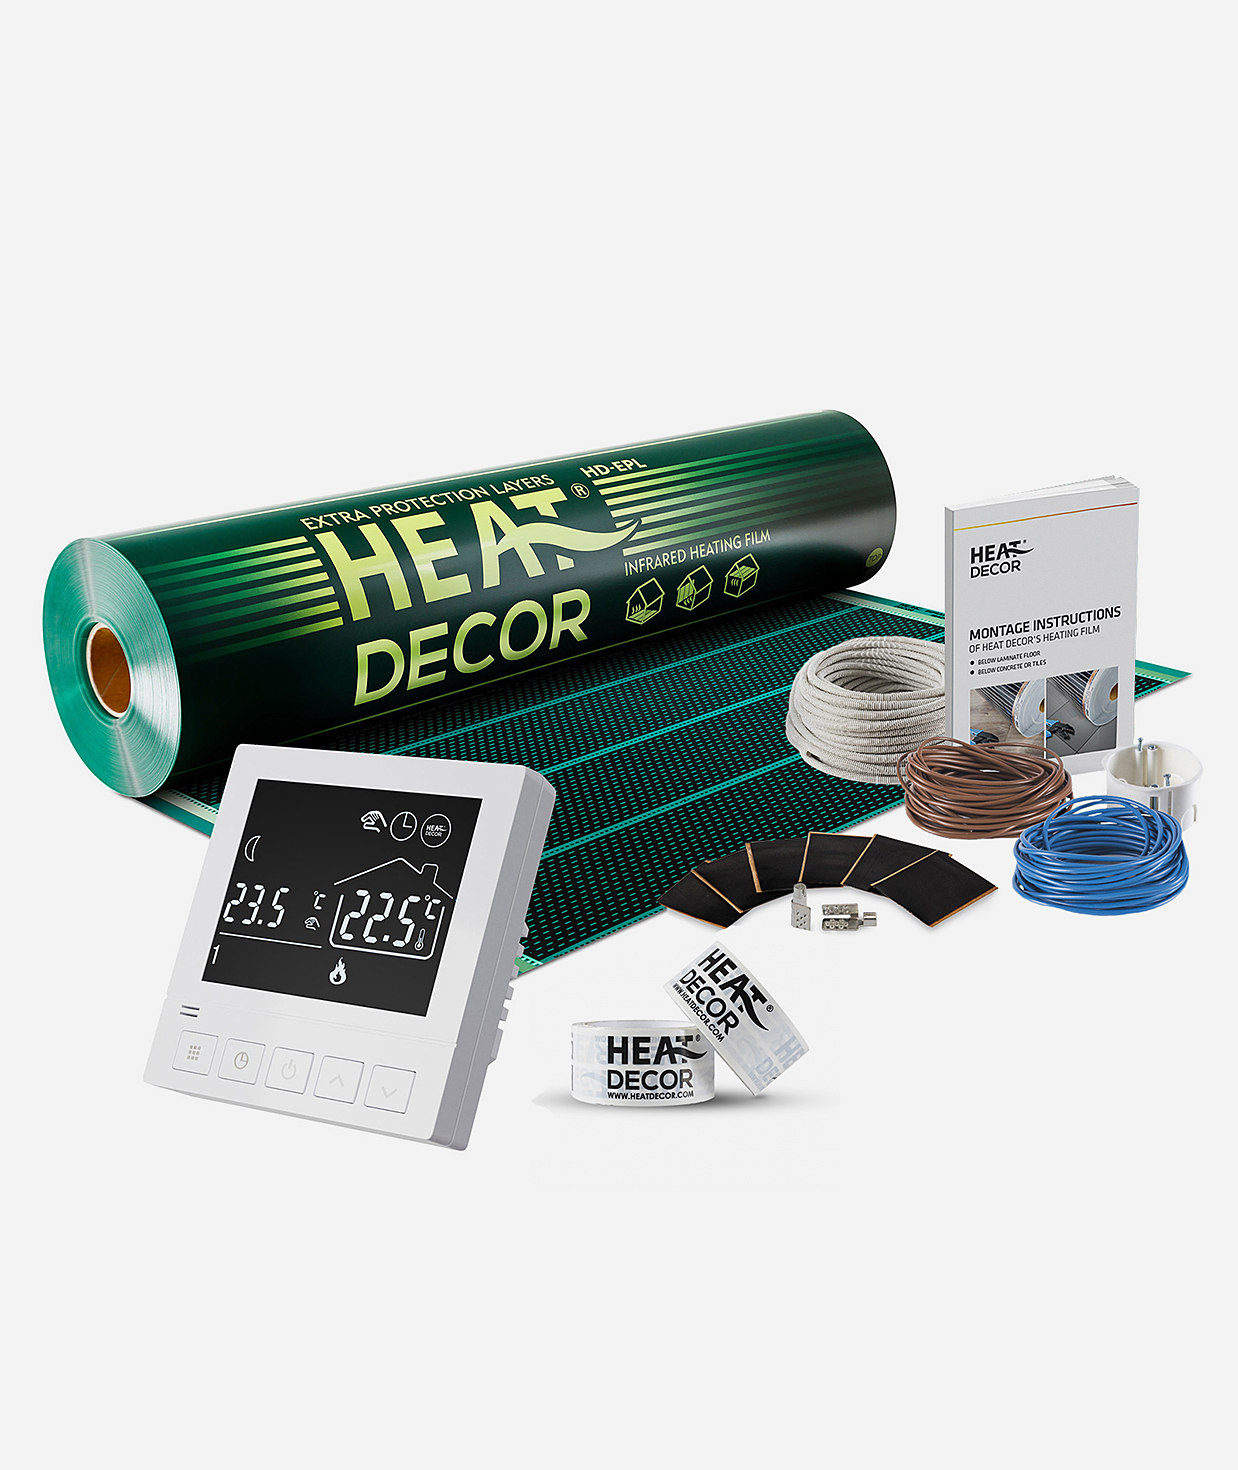 Heat Decor heating film setHD-EPL.100